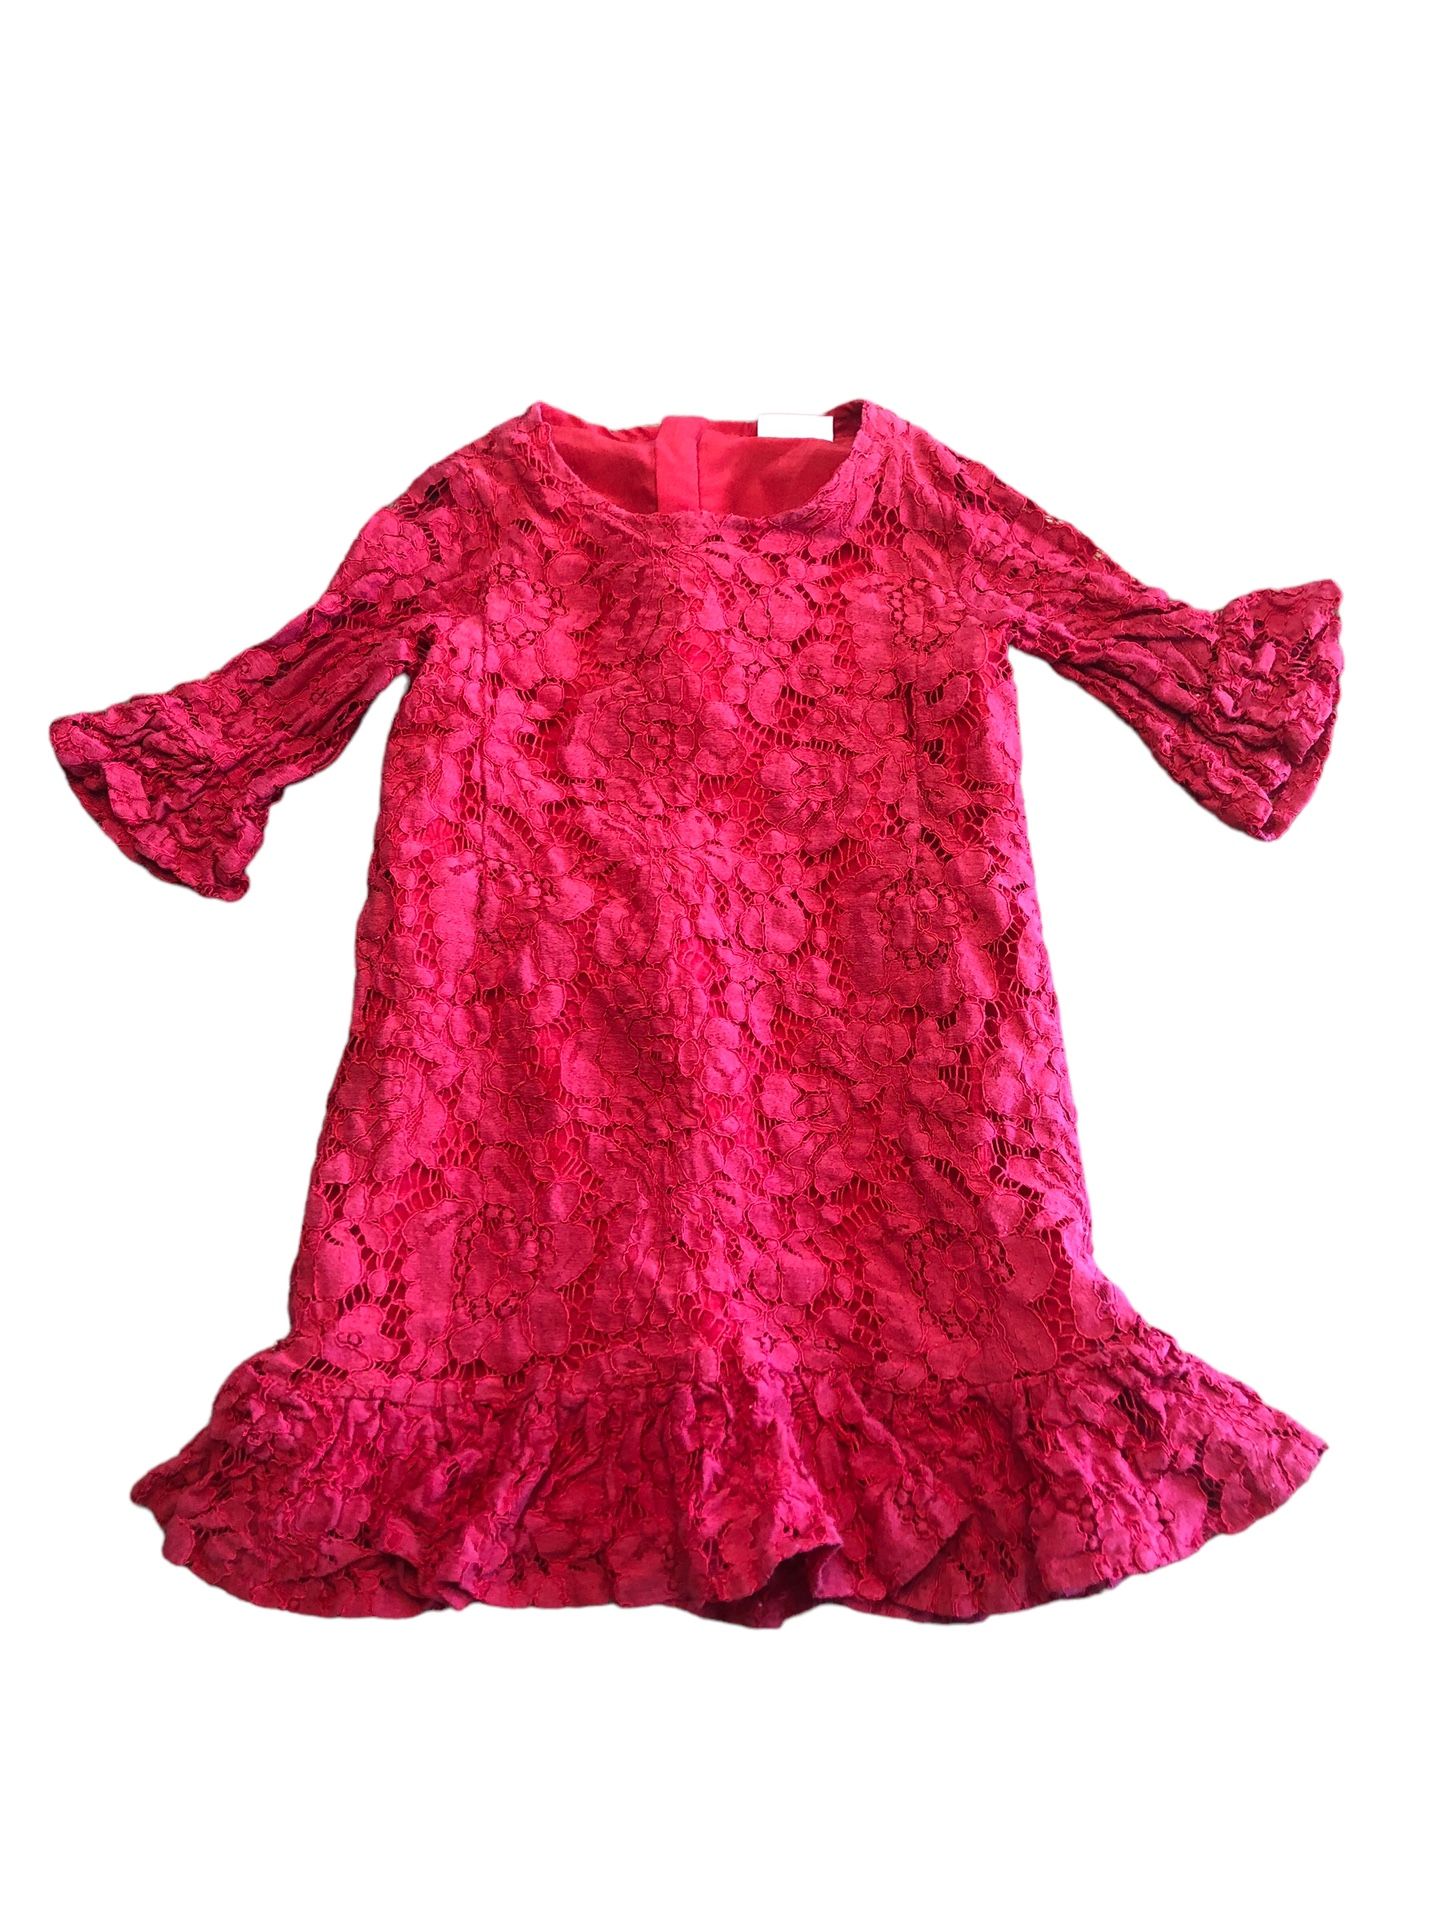 EUC 3T Boutique Lace Bell Sleeve Dress